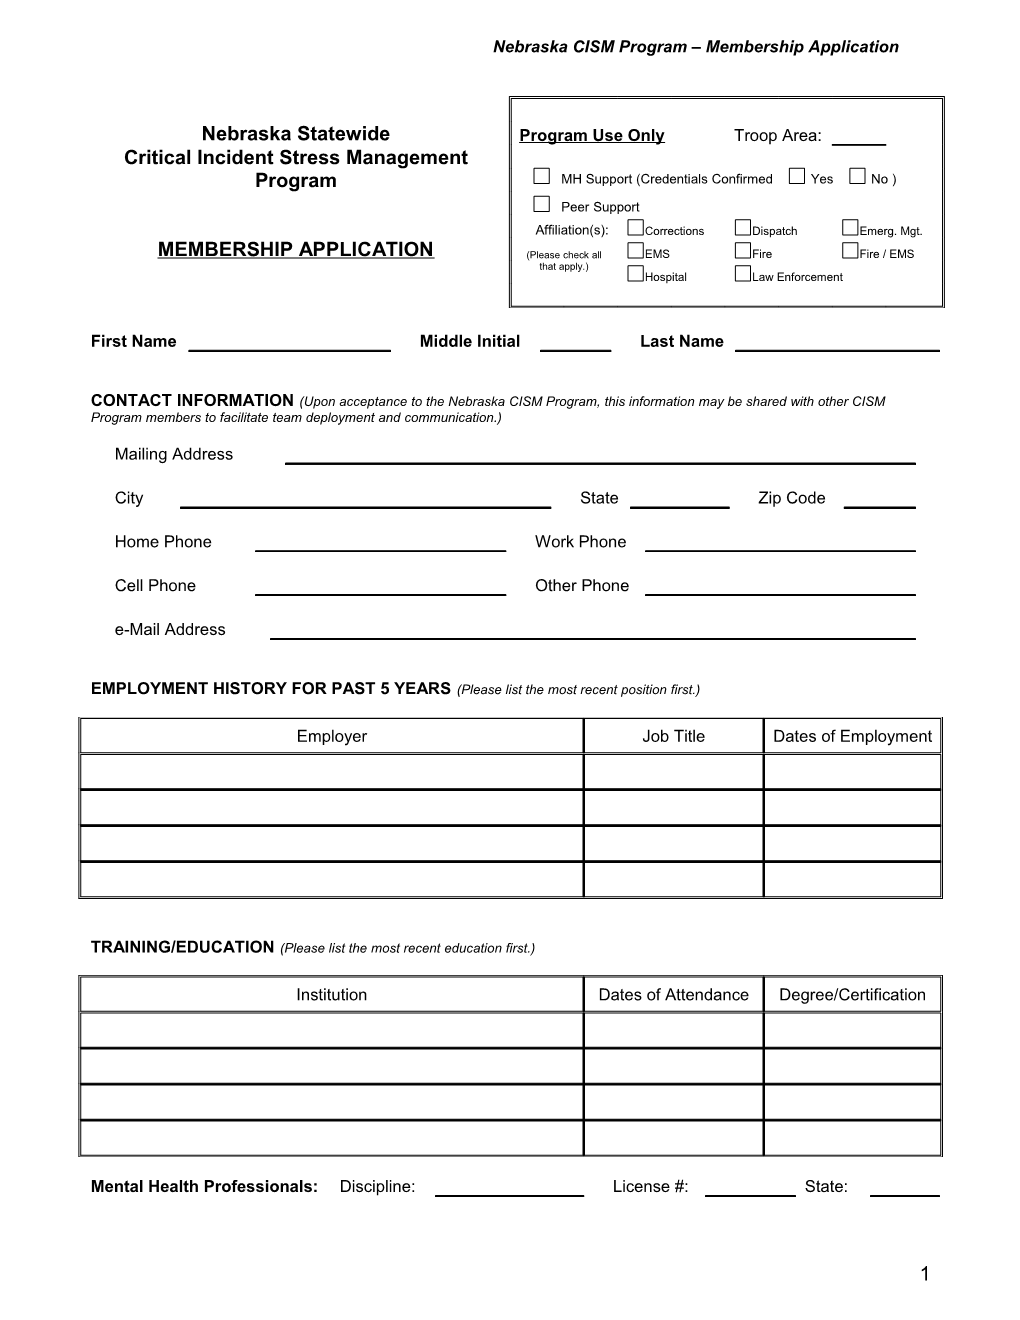 Nebraska CISM Program Membership Application